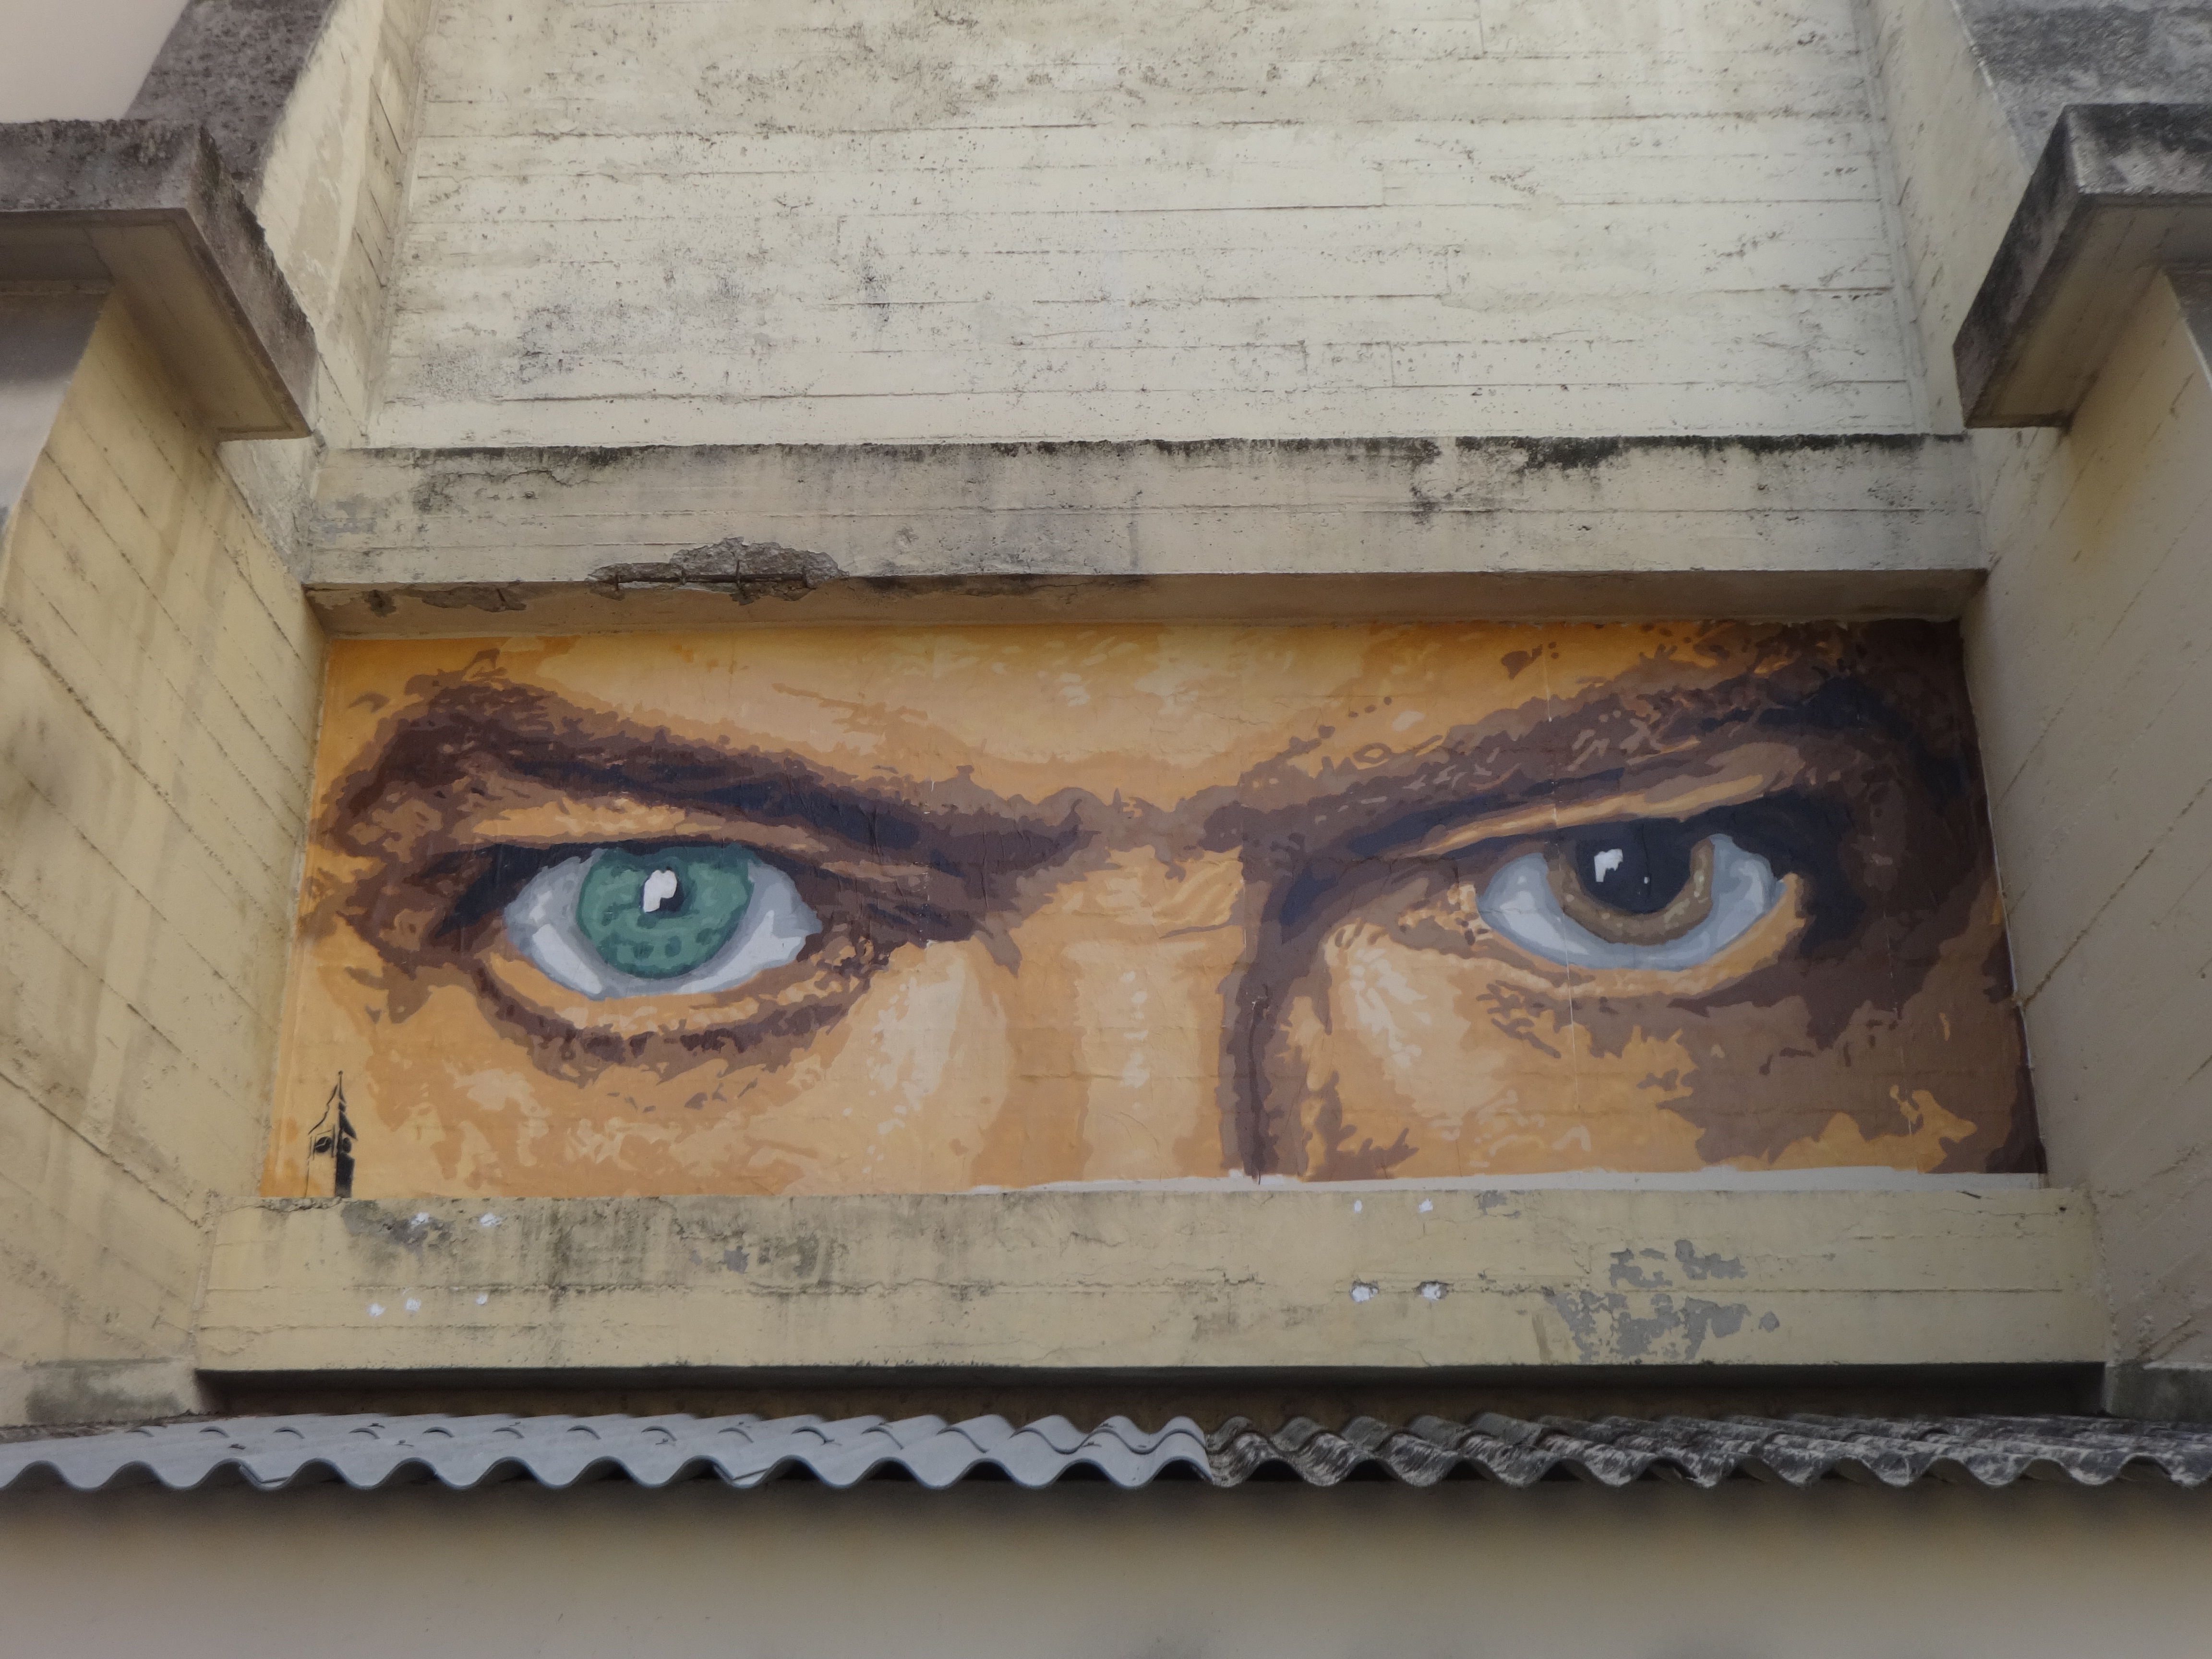 David Bowie's Eyes!